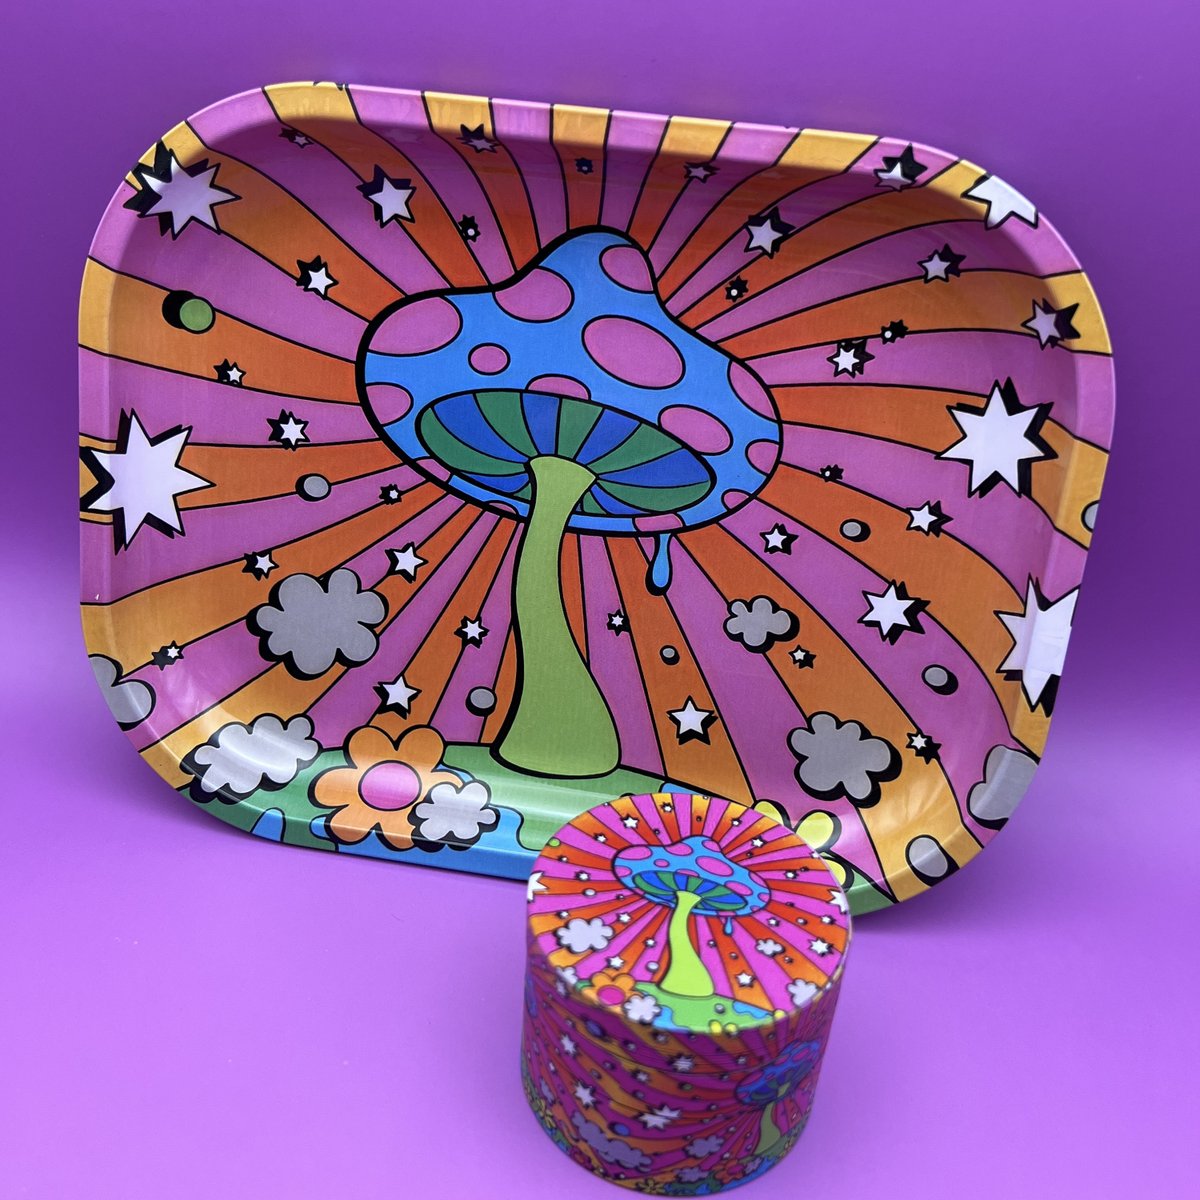 Rolling Tray and Grinder Kit | Mushroom Psychedelic Set Gift Box etsy.me/45jgQj8 #shroom #mushroom #psychedelic #cutetraygrinder #resinrollingtray #beautifulmetaltray #giftsetforher #traygrinderset